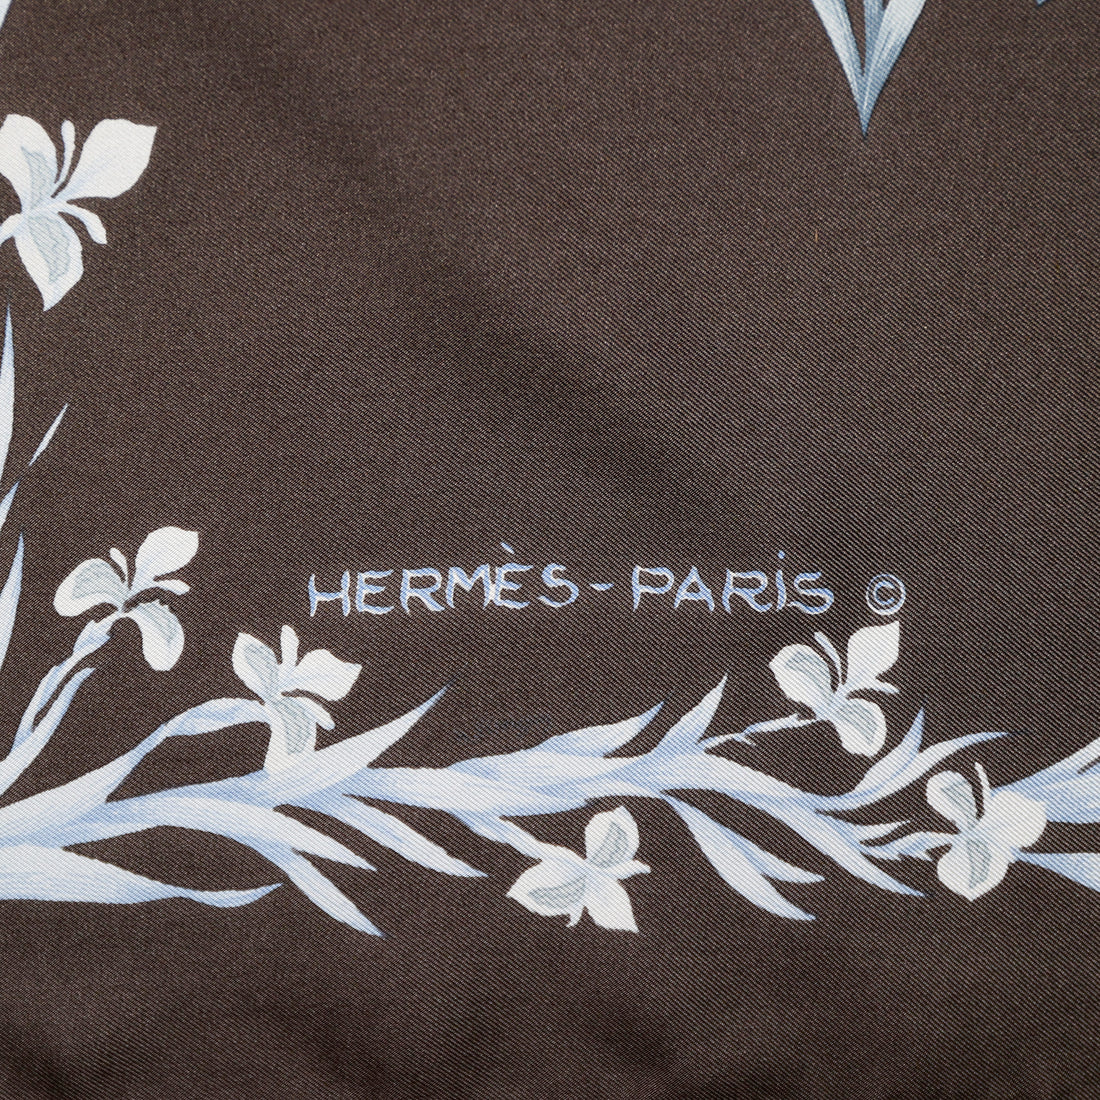 Hermès floral print silk scarf